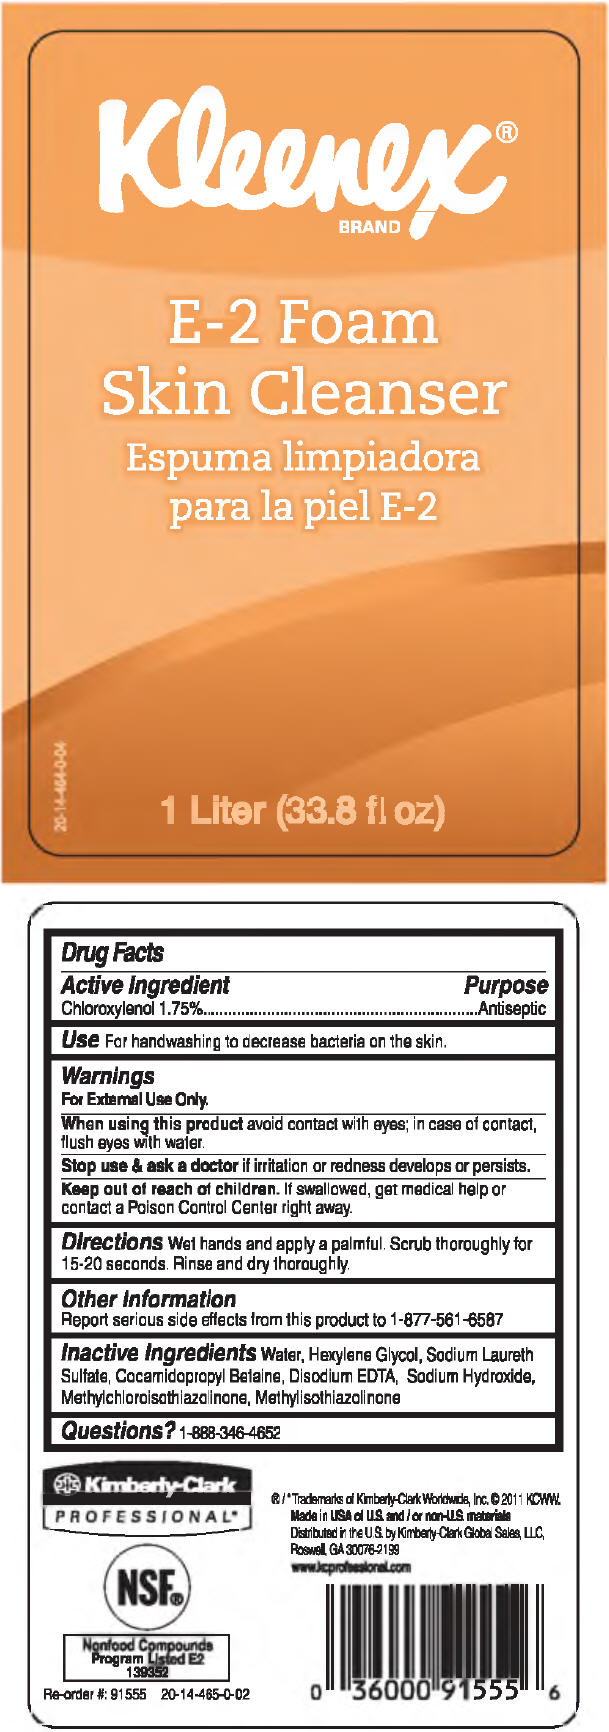 PRINCIPAL DISPLAY PANEL - 1 Liter Container Label